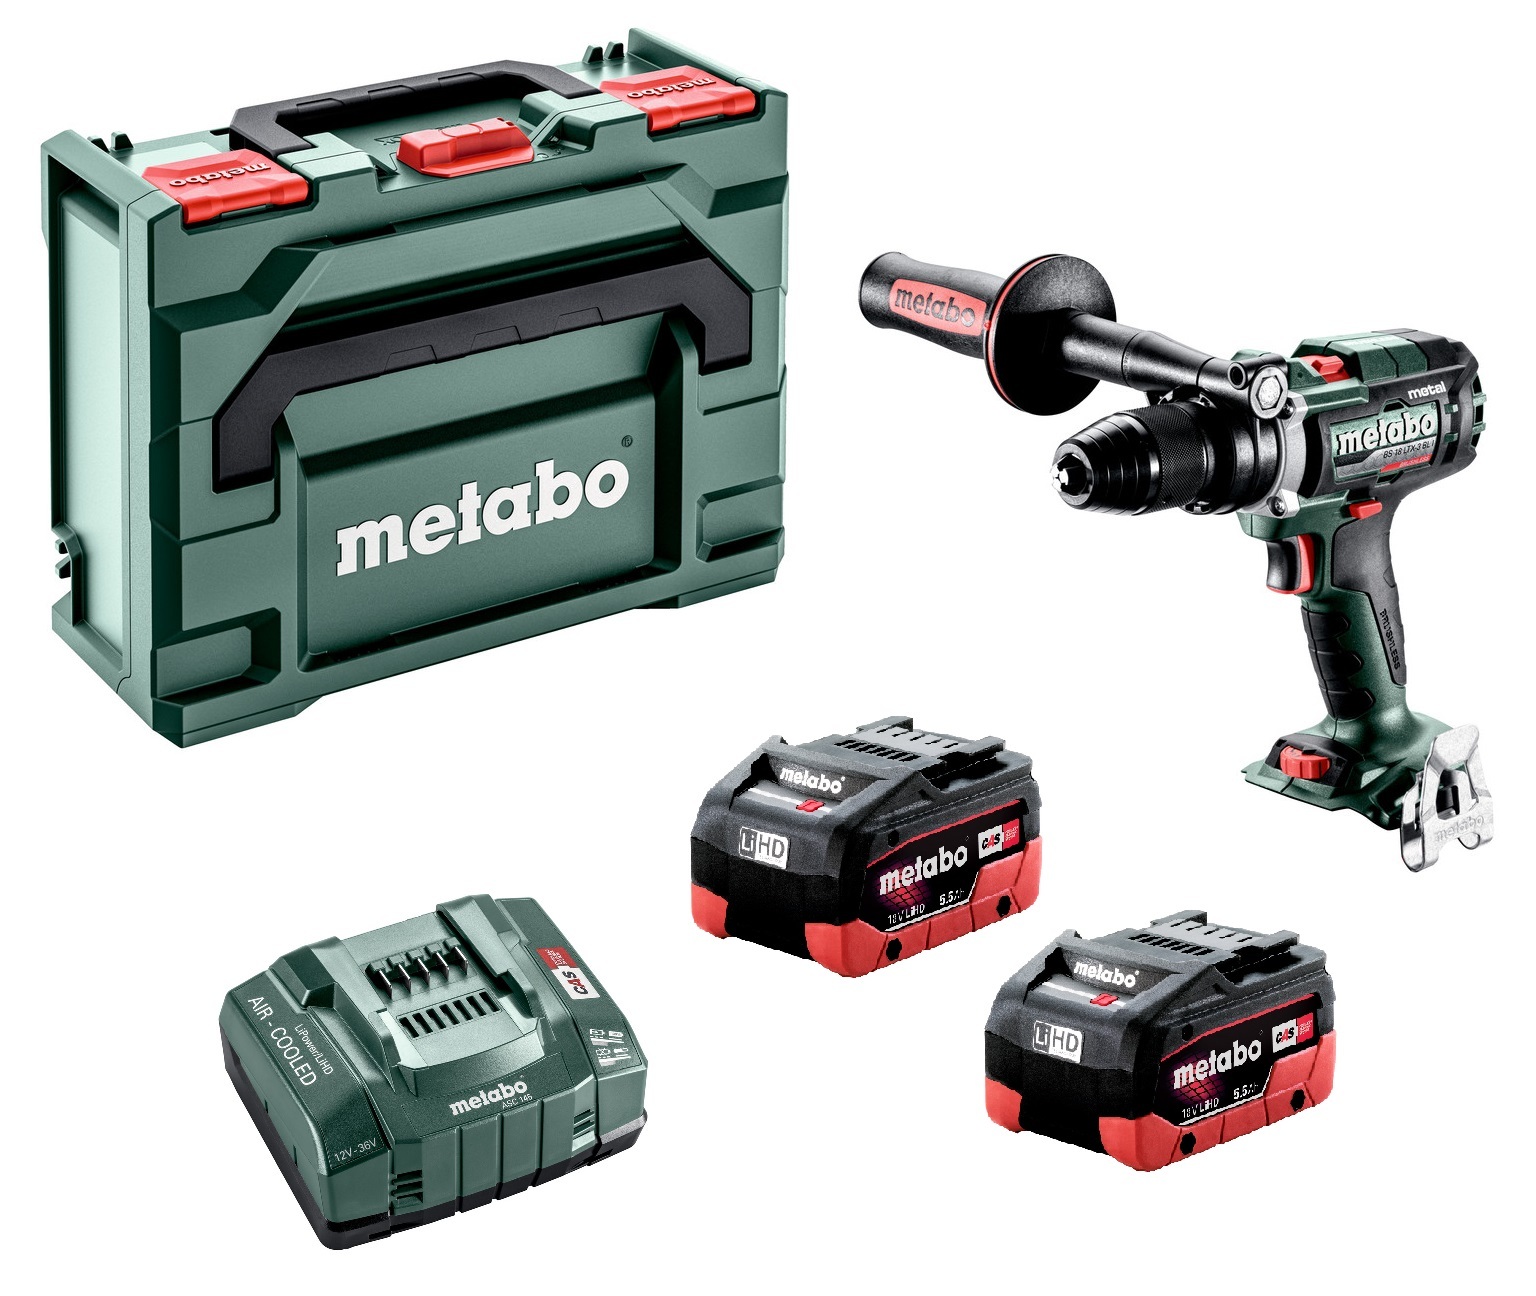 Metabo BS 18 LTX-3 BL I Metal 18V LiHD Accu Boorschroefmachine Set (2x 5.5Ah) In Metabox - 130Nm - 68mm